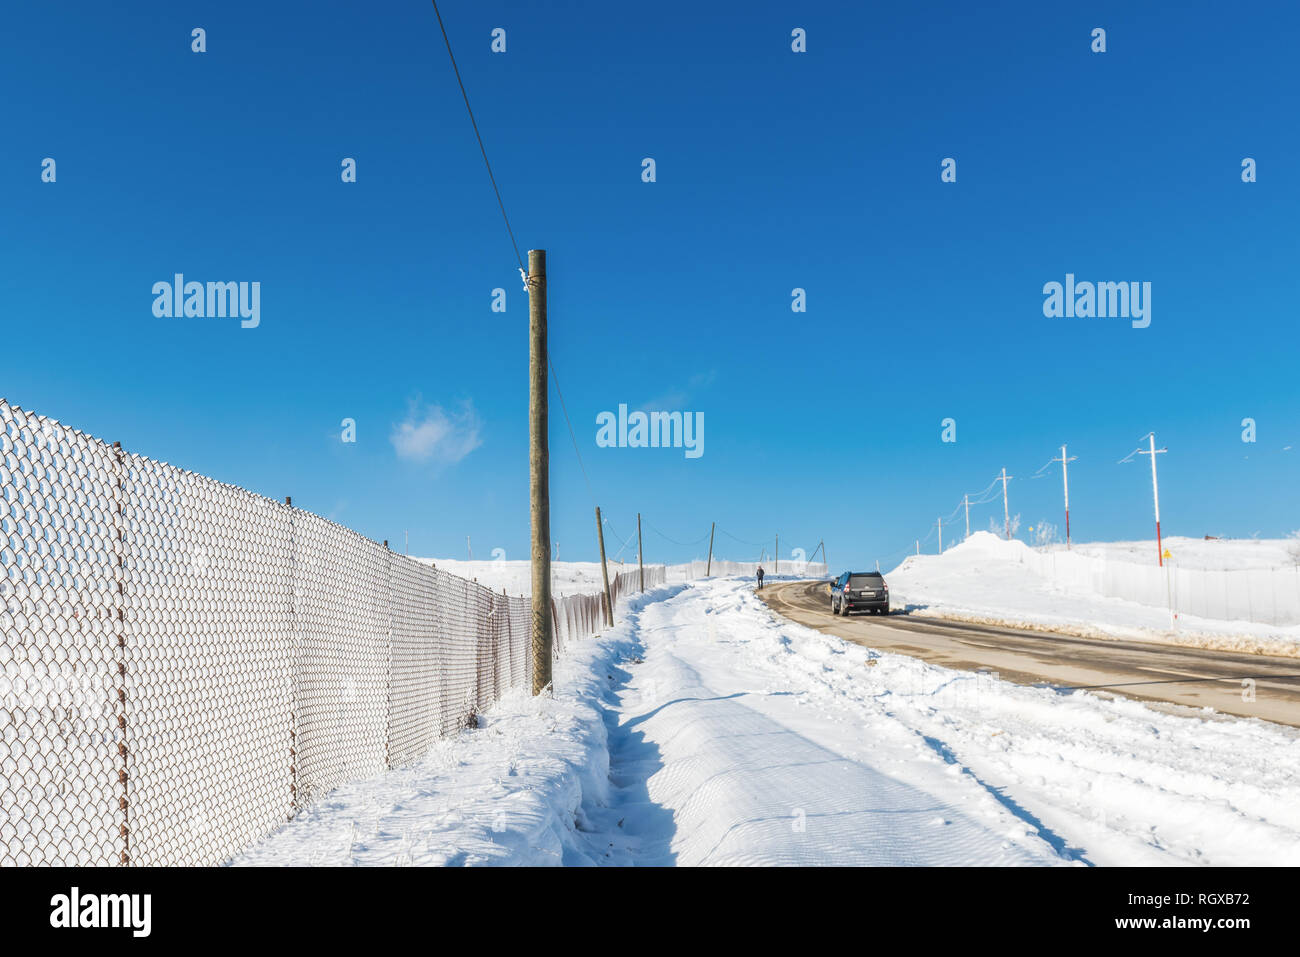 Snow fence along the road, winter scene Stock Photo